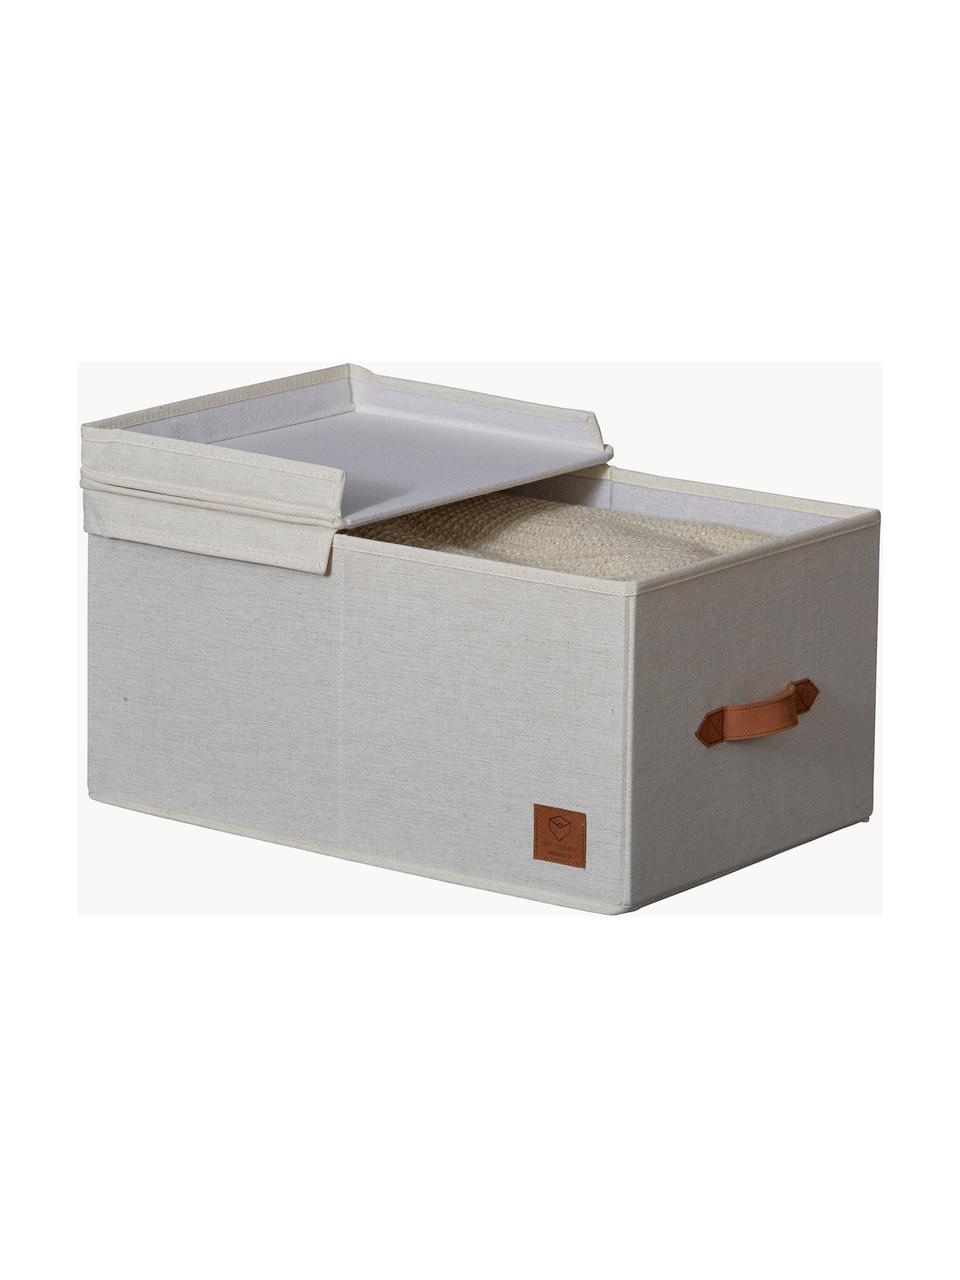 Úložný box Premium, Světle béžová, hnědá, Š 33 cm, H 50 cm